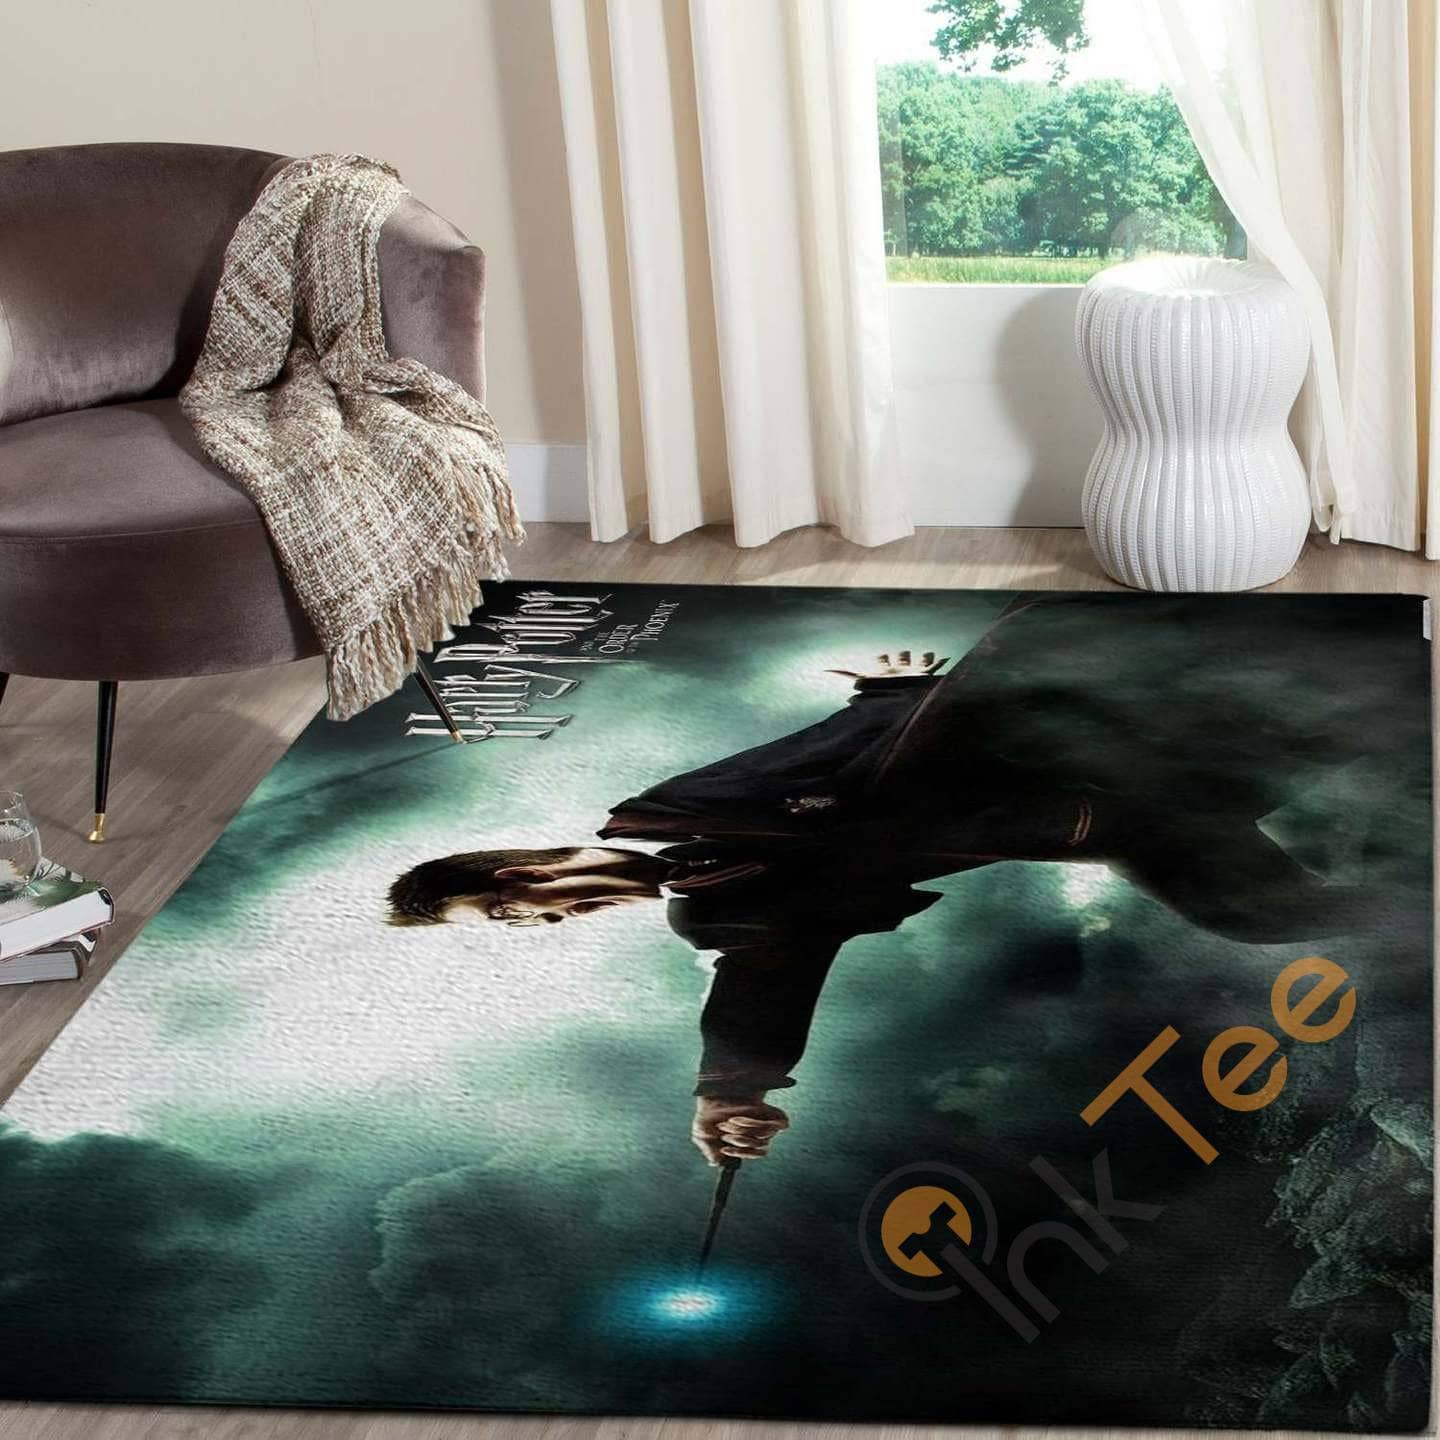 Harry Potter And Order Of The Phoenix 2 Carpet Living Room Floor Decor Gift For Fan Rug